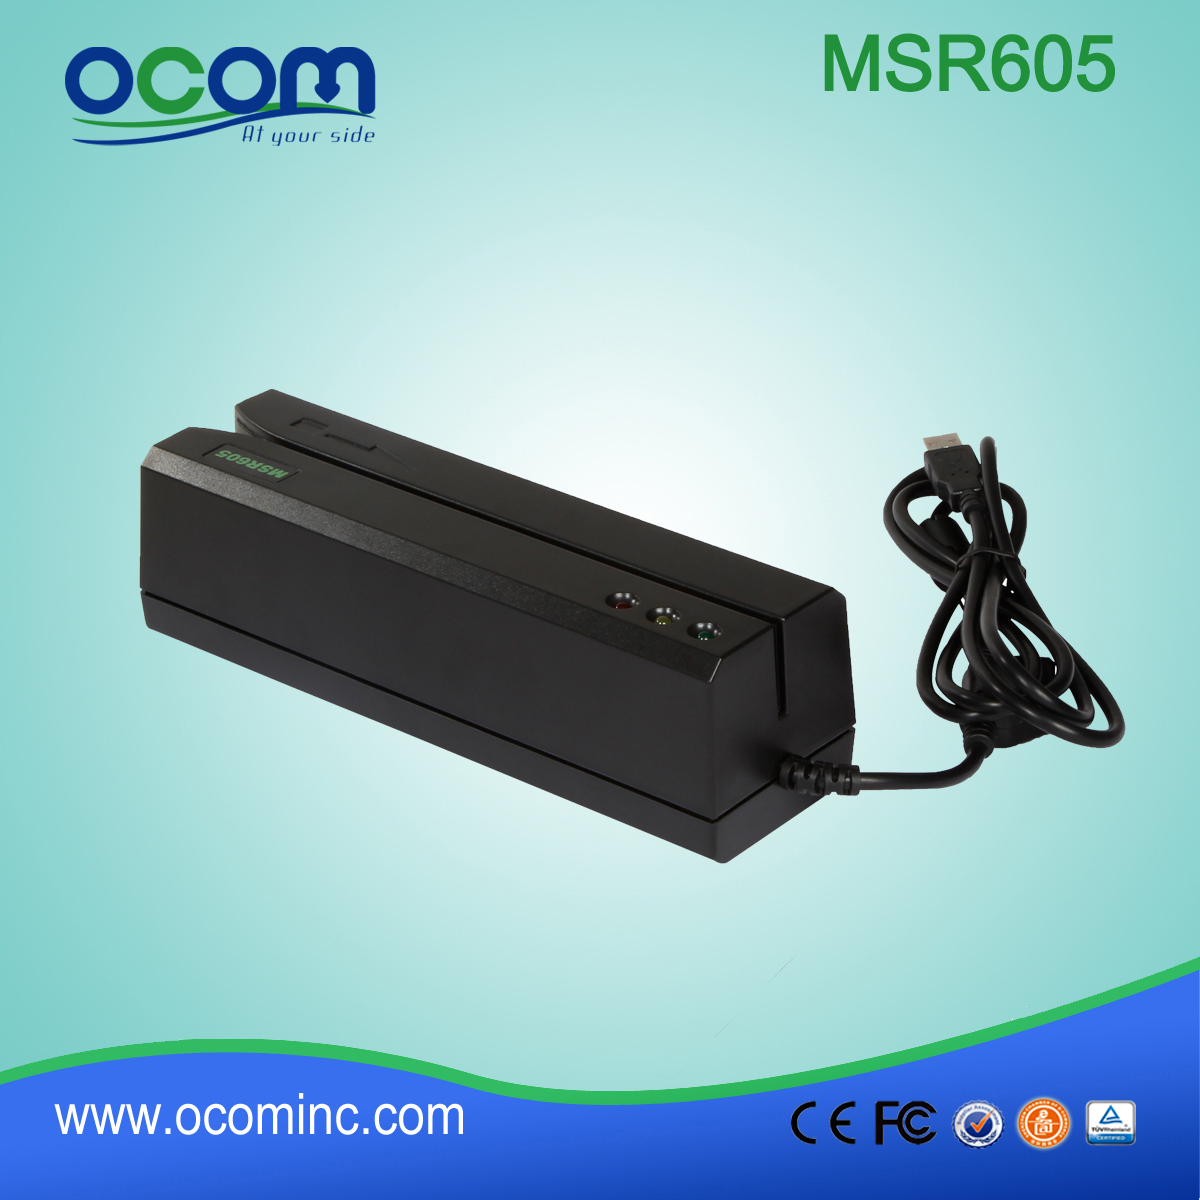 (MSR605) Κίνα έκανε μίνι συσκευή ανάγνωσης καρτών και συγγραφέας RS232, αναγνώστη καρτών και συγγραφέας USB